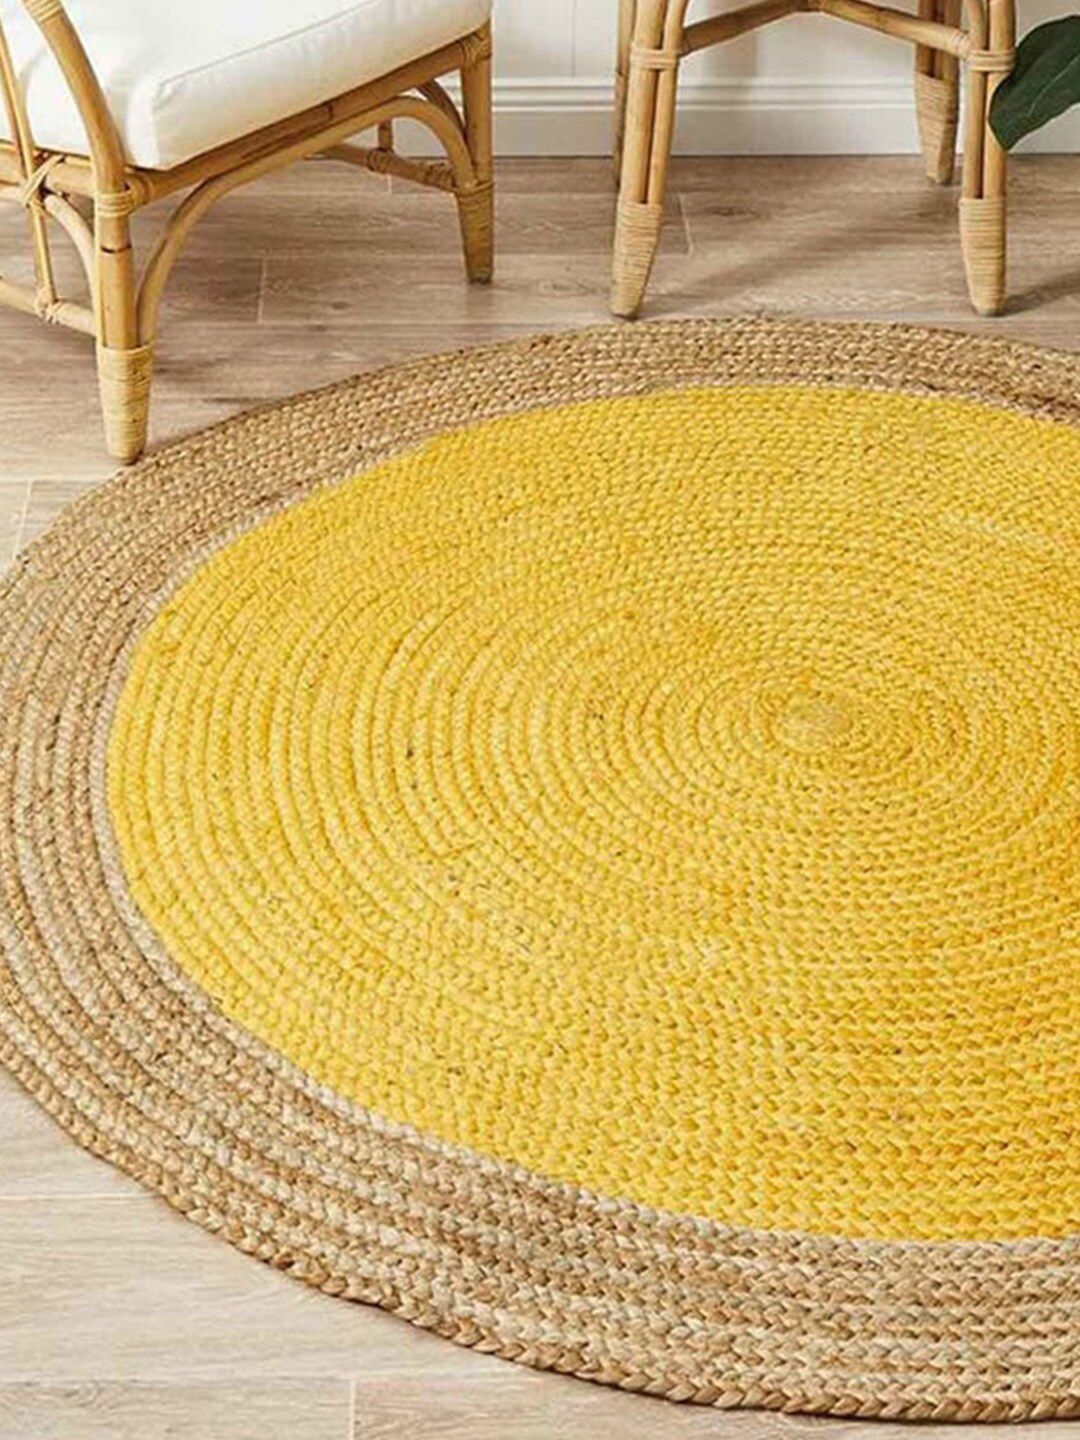 HABERE INDIA Yellow & Beige Braided Round Jute Carpet Price in India